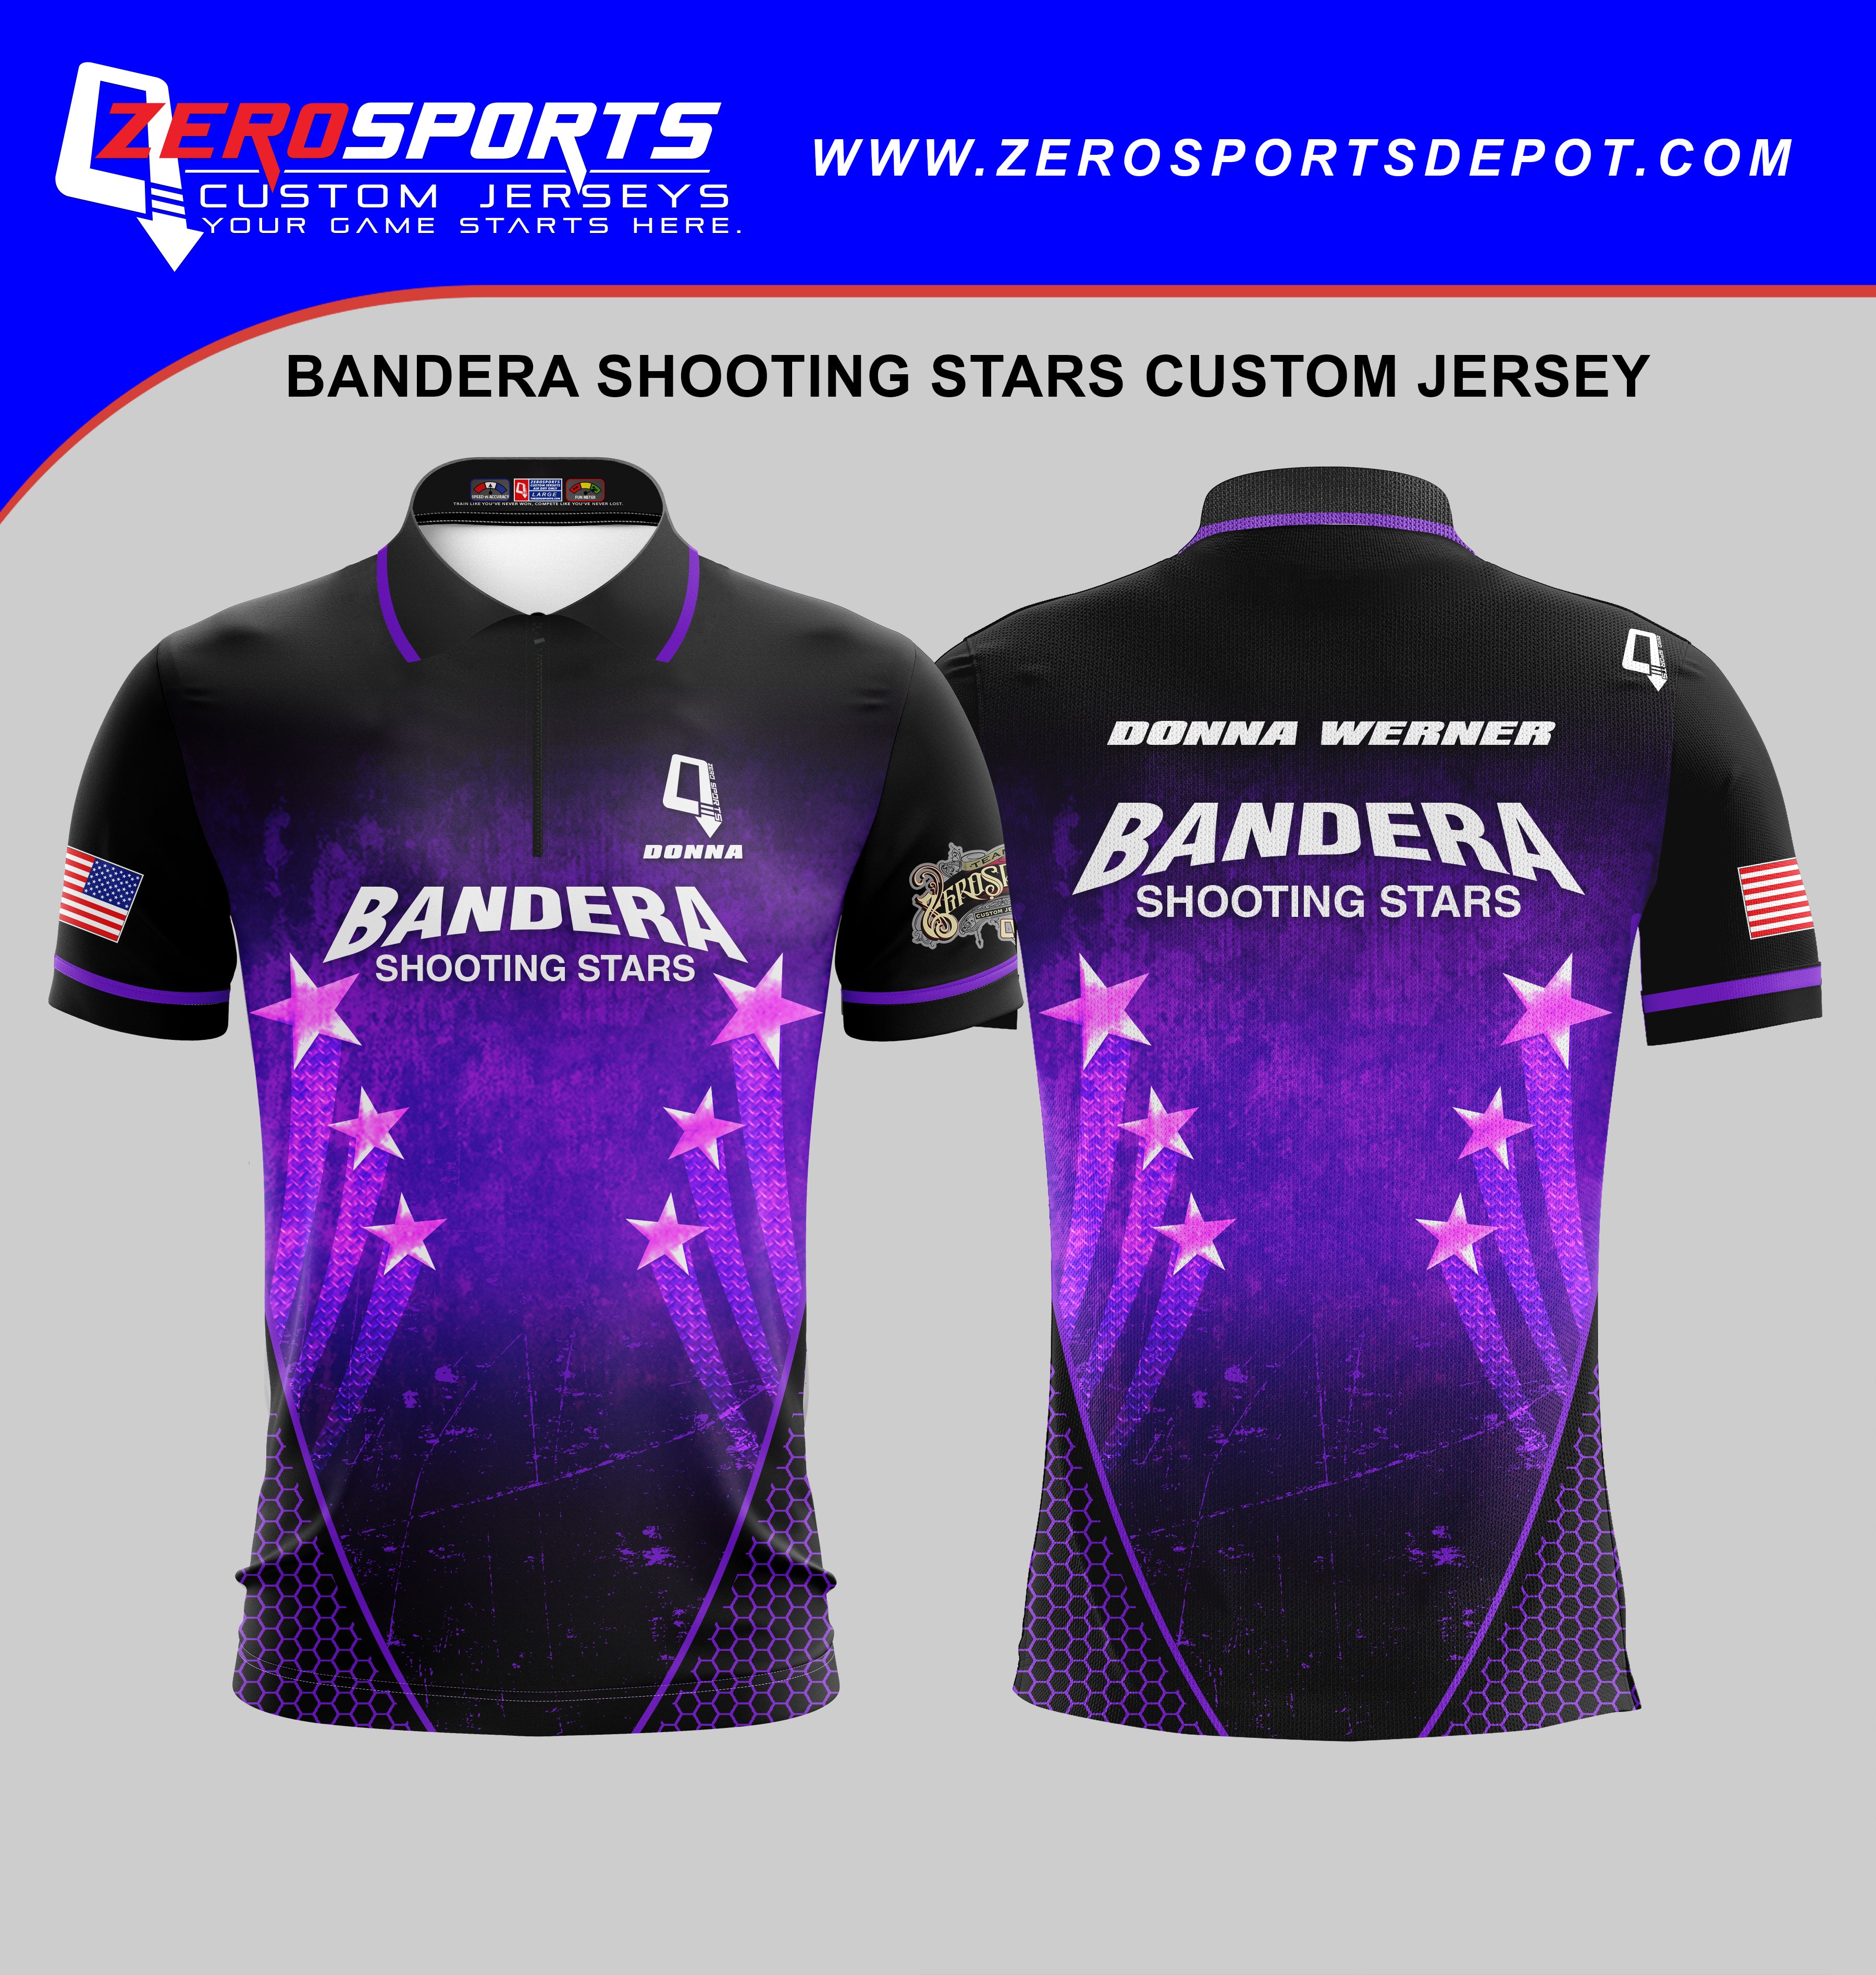 Bandera Shooting Stars Team Jersey